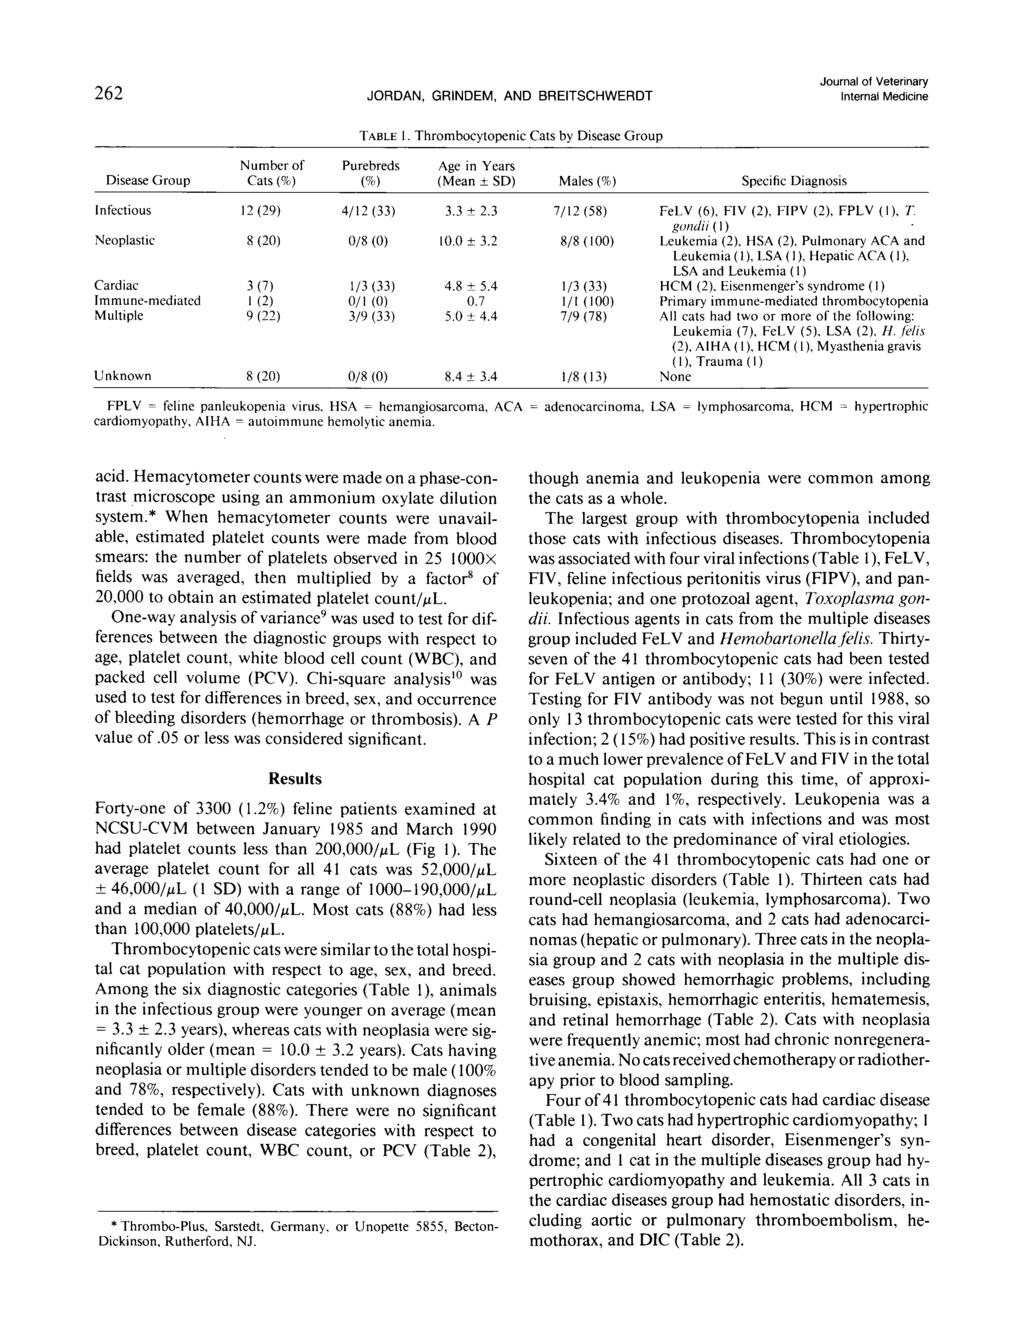 262 JORDAN, GRINDEM, AND BREITSCHWERDT Journal of Veterinary Internal Medicine TABLE I.